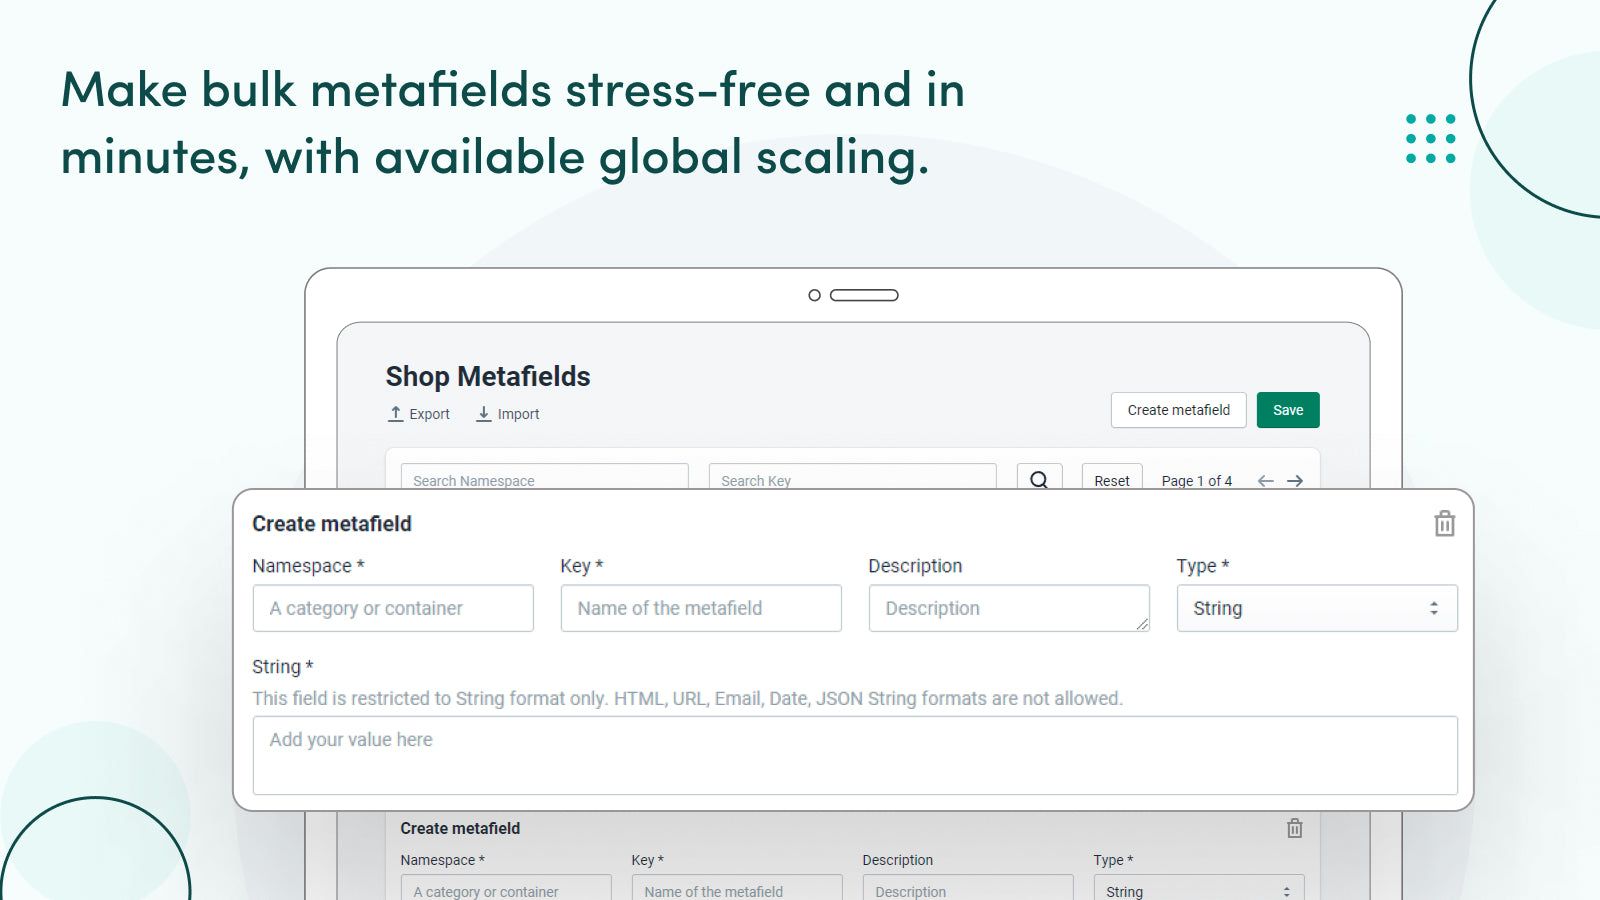 Global scaling allows bulk Metafield modifications stress-free.